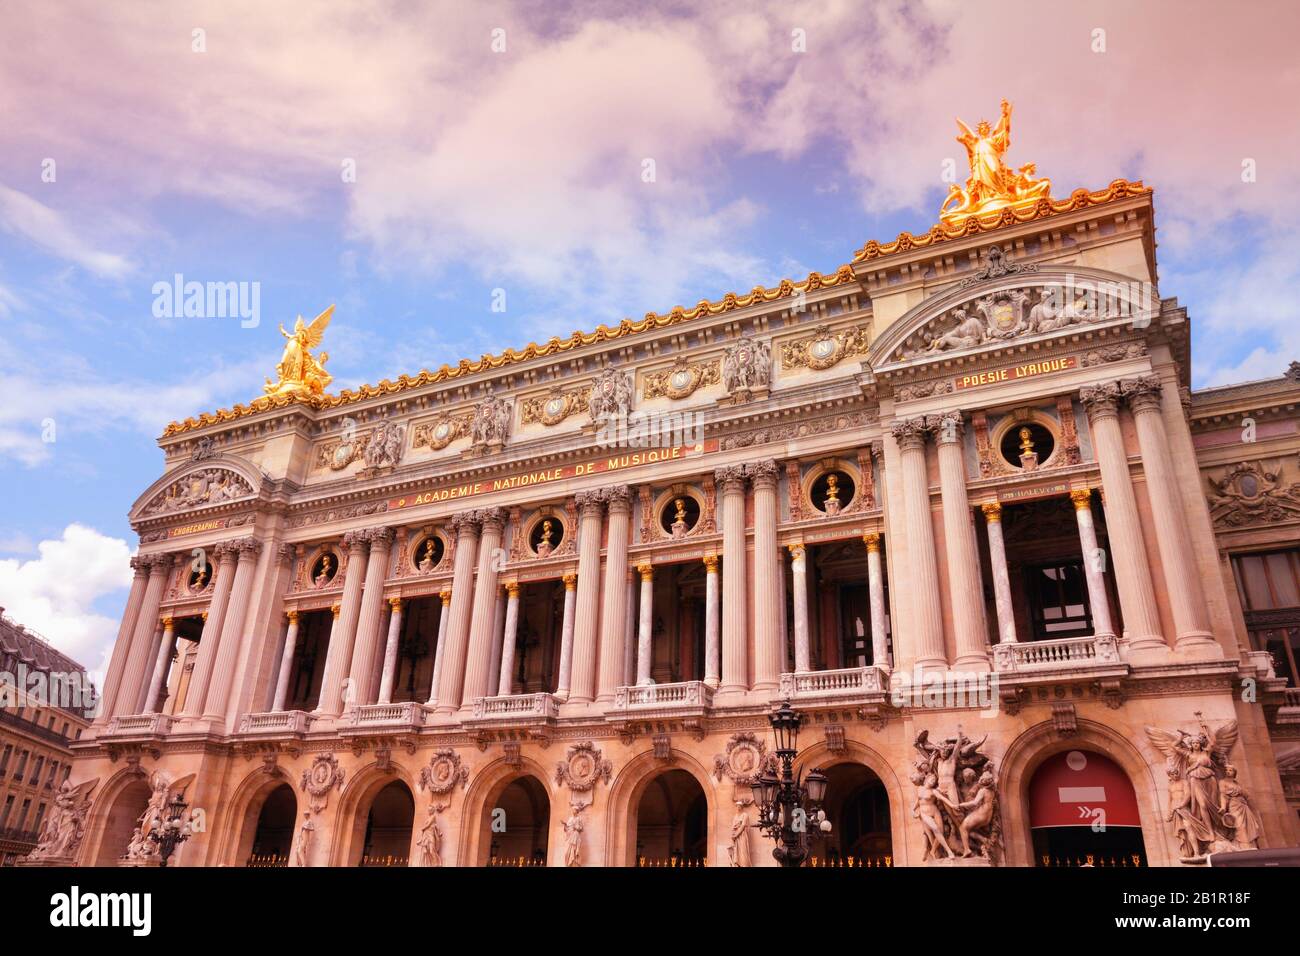 Paris, France - famous Opera Garnier. UNESCO World Heritage Site. Filtered style colors. Stock Photo